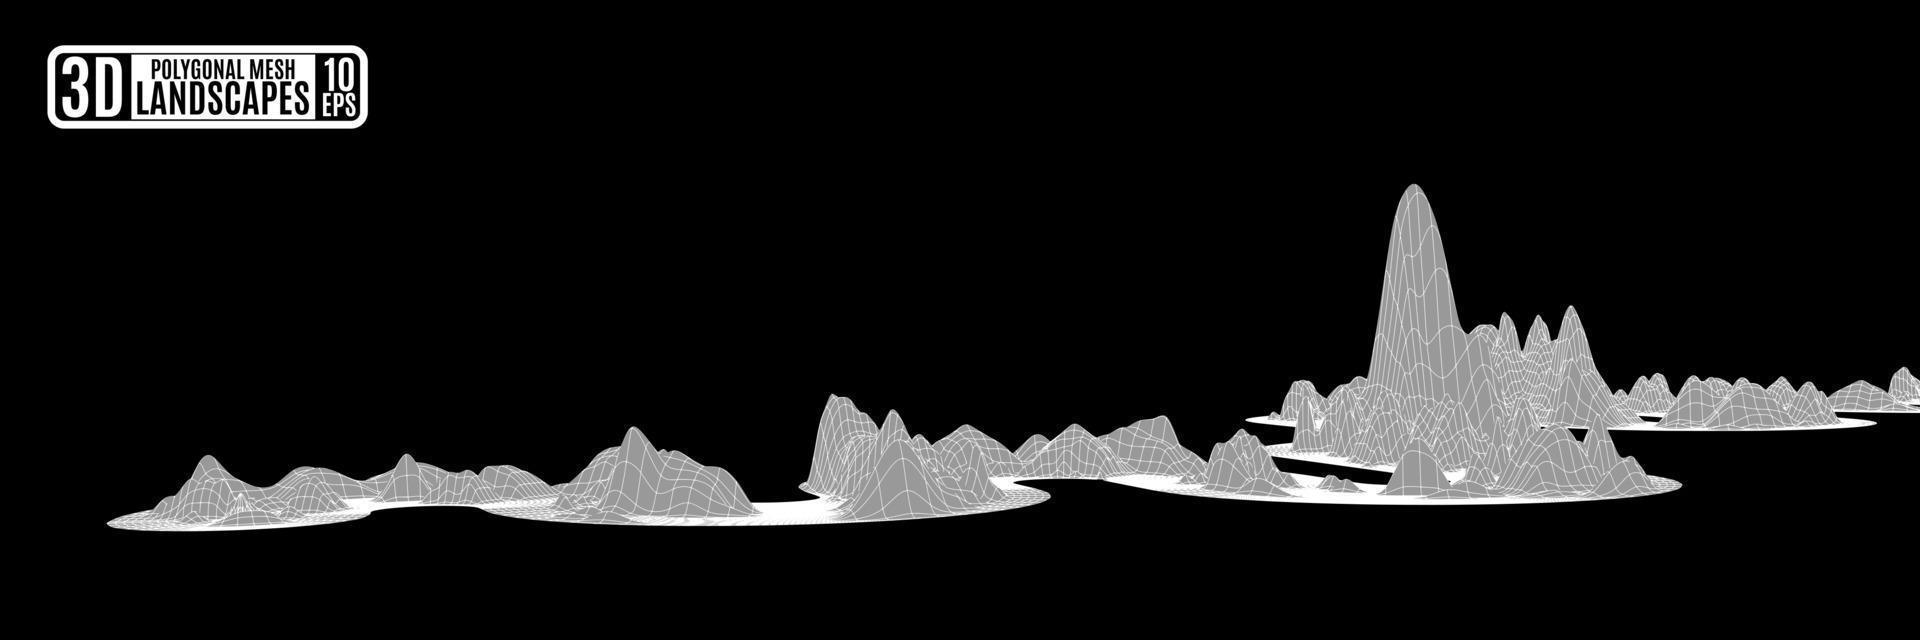 paisaje de montaña gris de polígonos dibujo vectorial vector